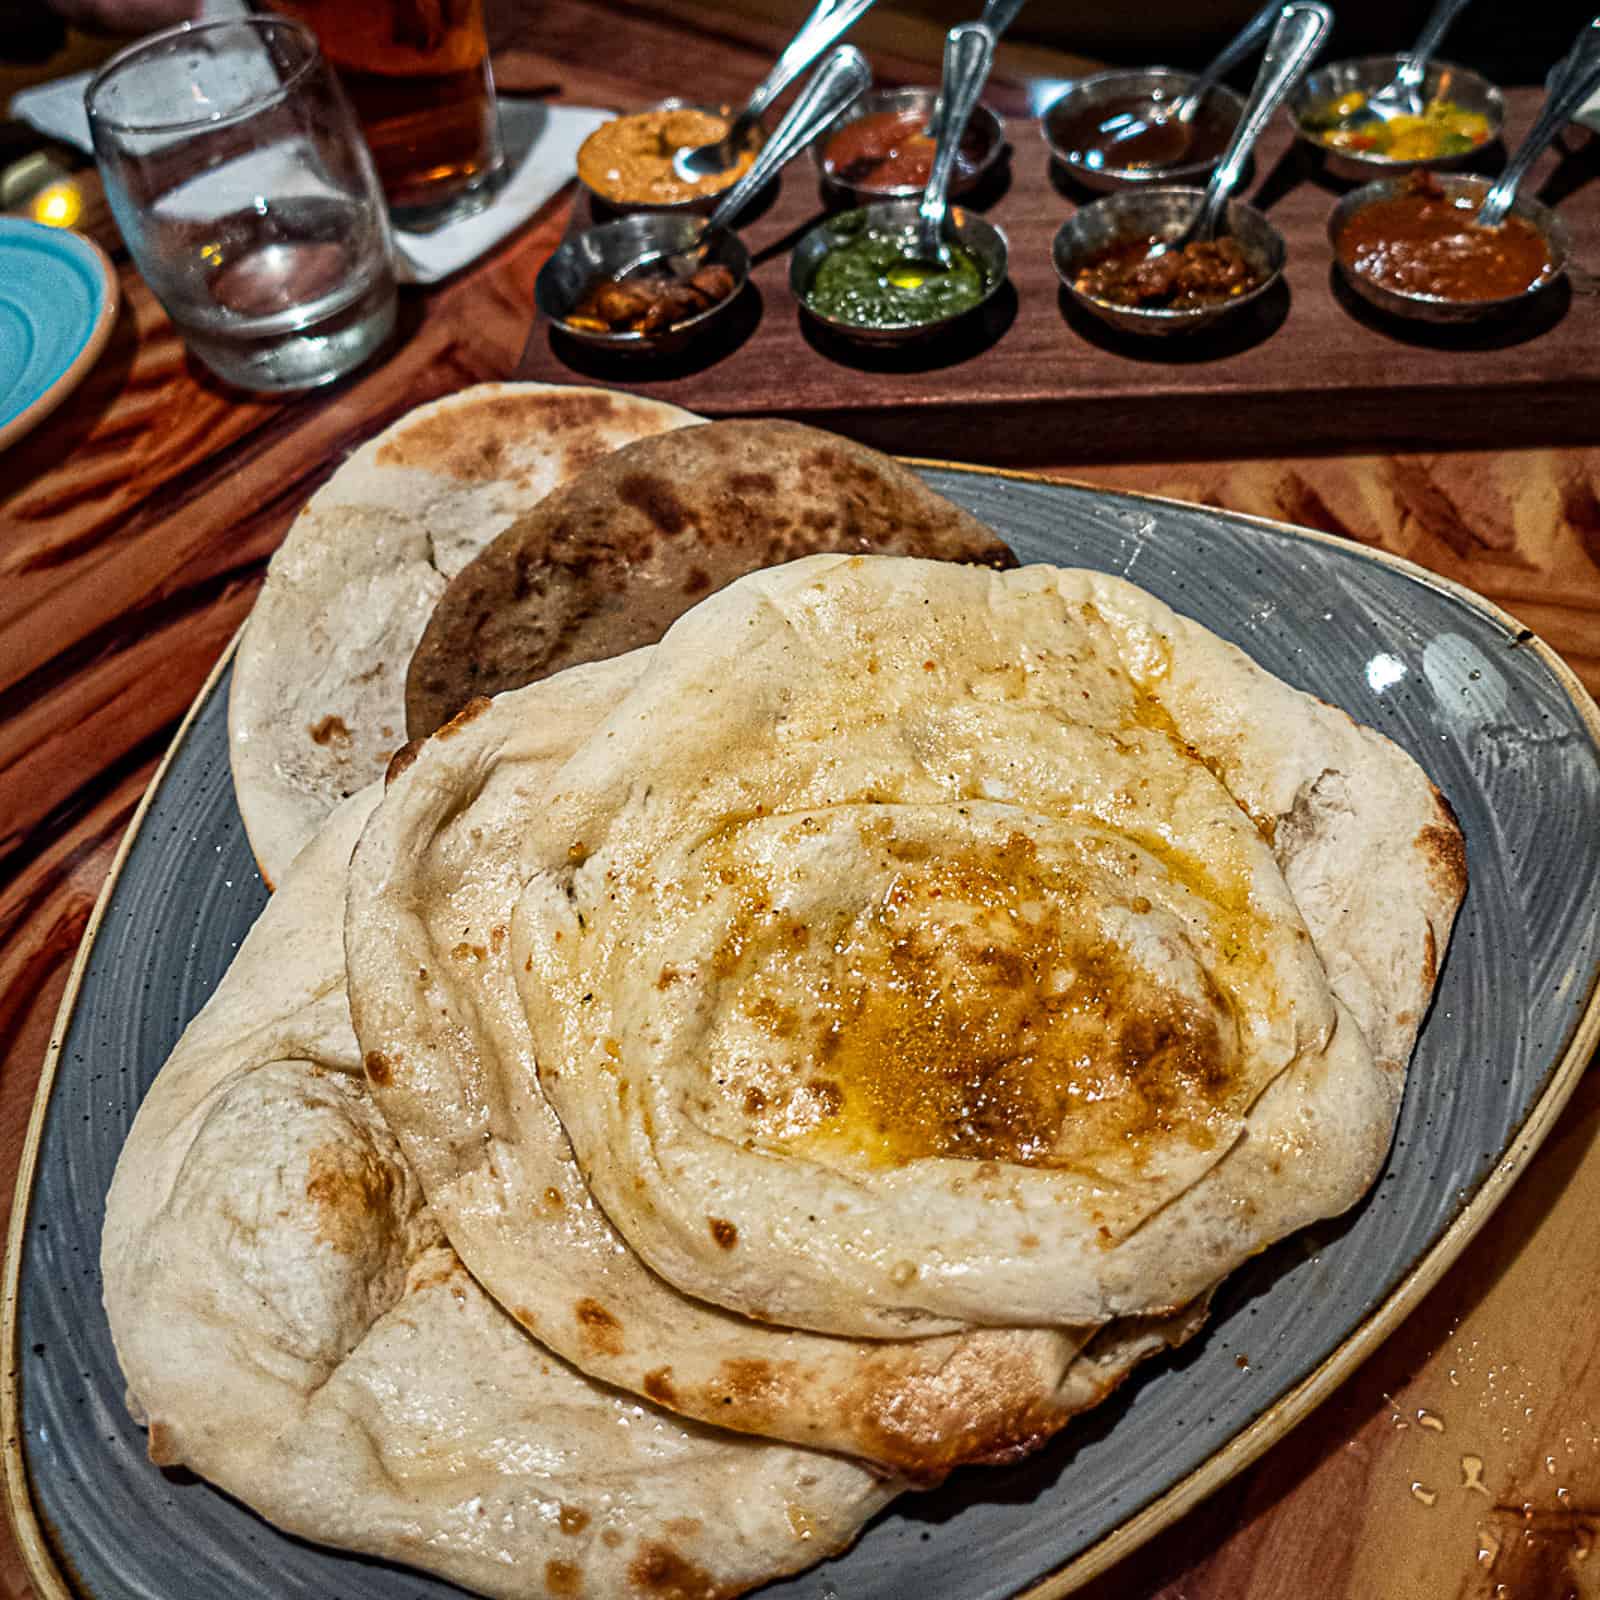 Sanaa Bread Service menu item with Naan And Chutney Sauce Dips at Animal Kingdom Lodge Disney World